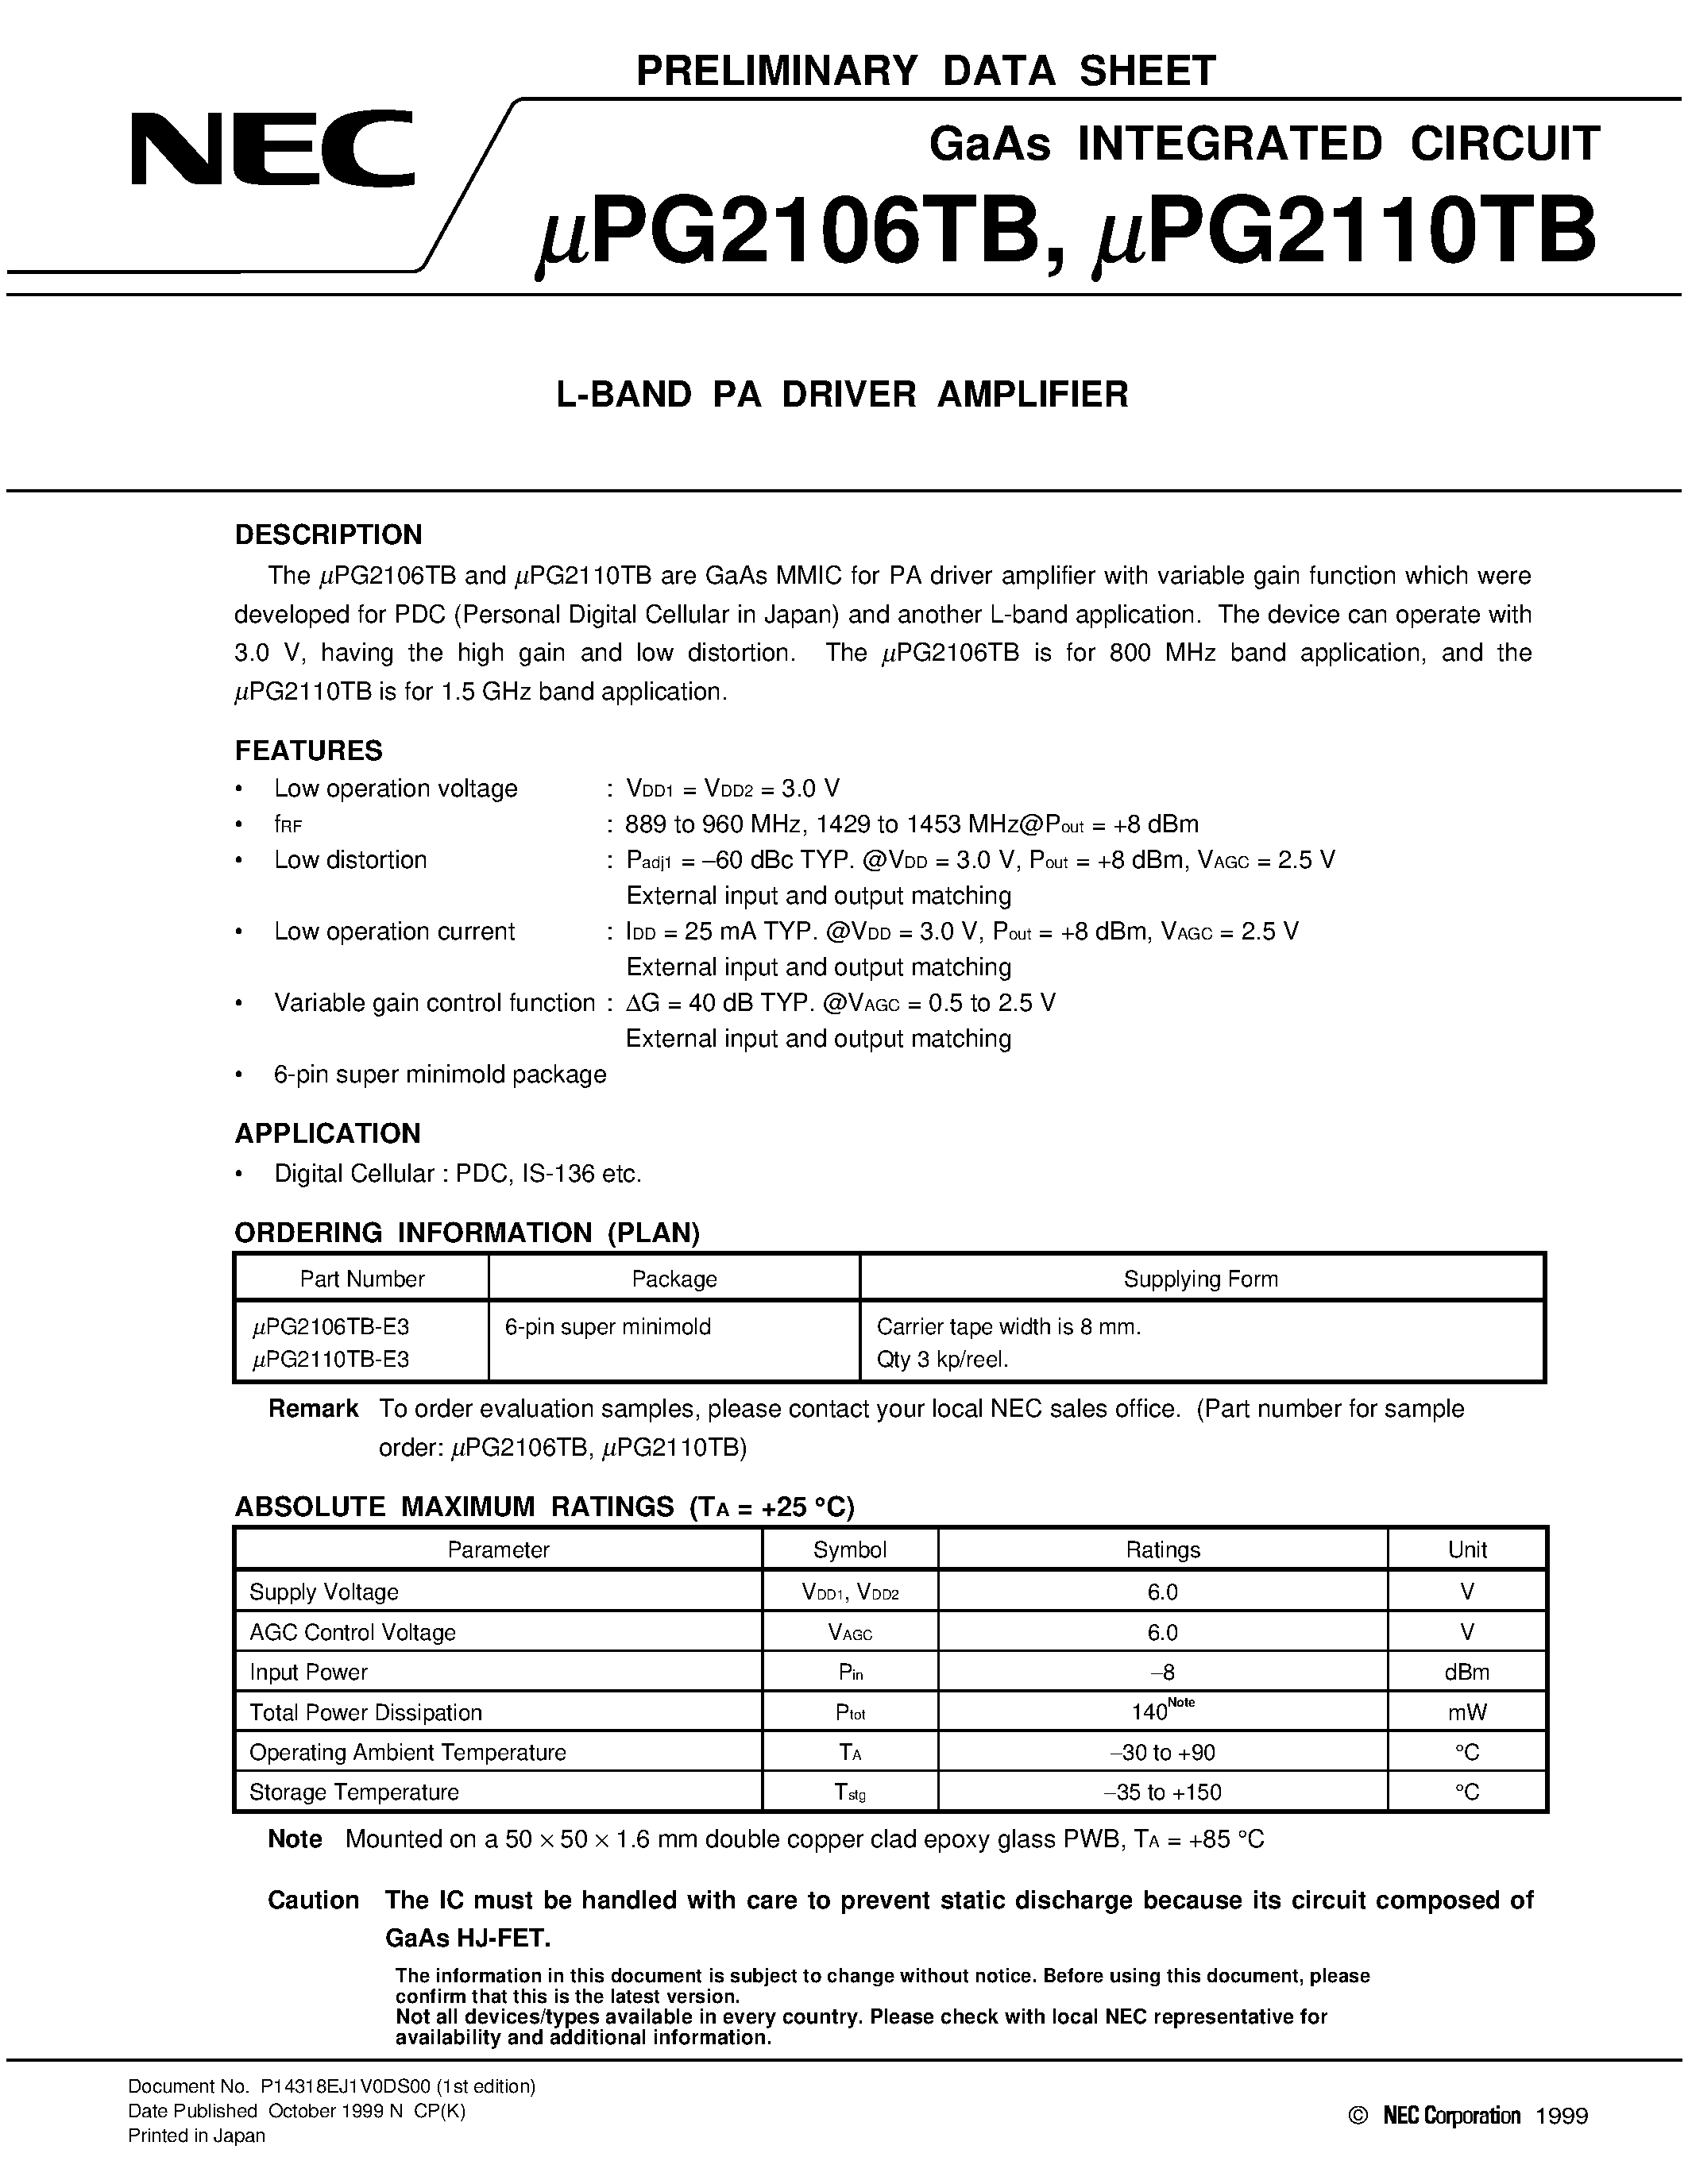 Datasheet UPG2110TB - L-BAND PA DRIVER AMPLIFIER page 1